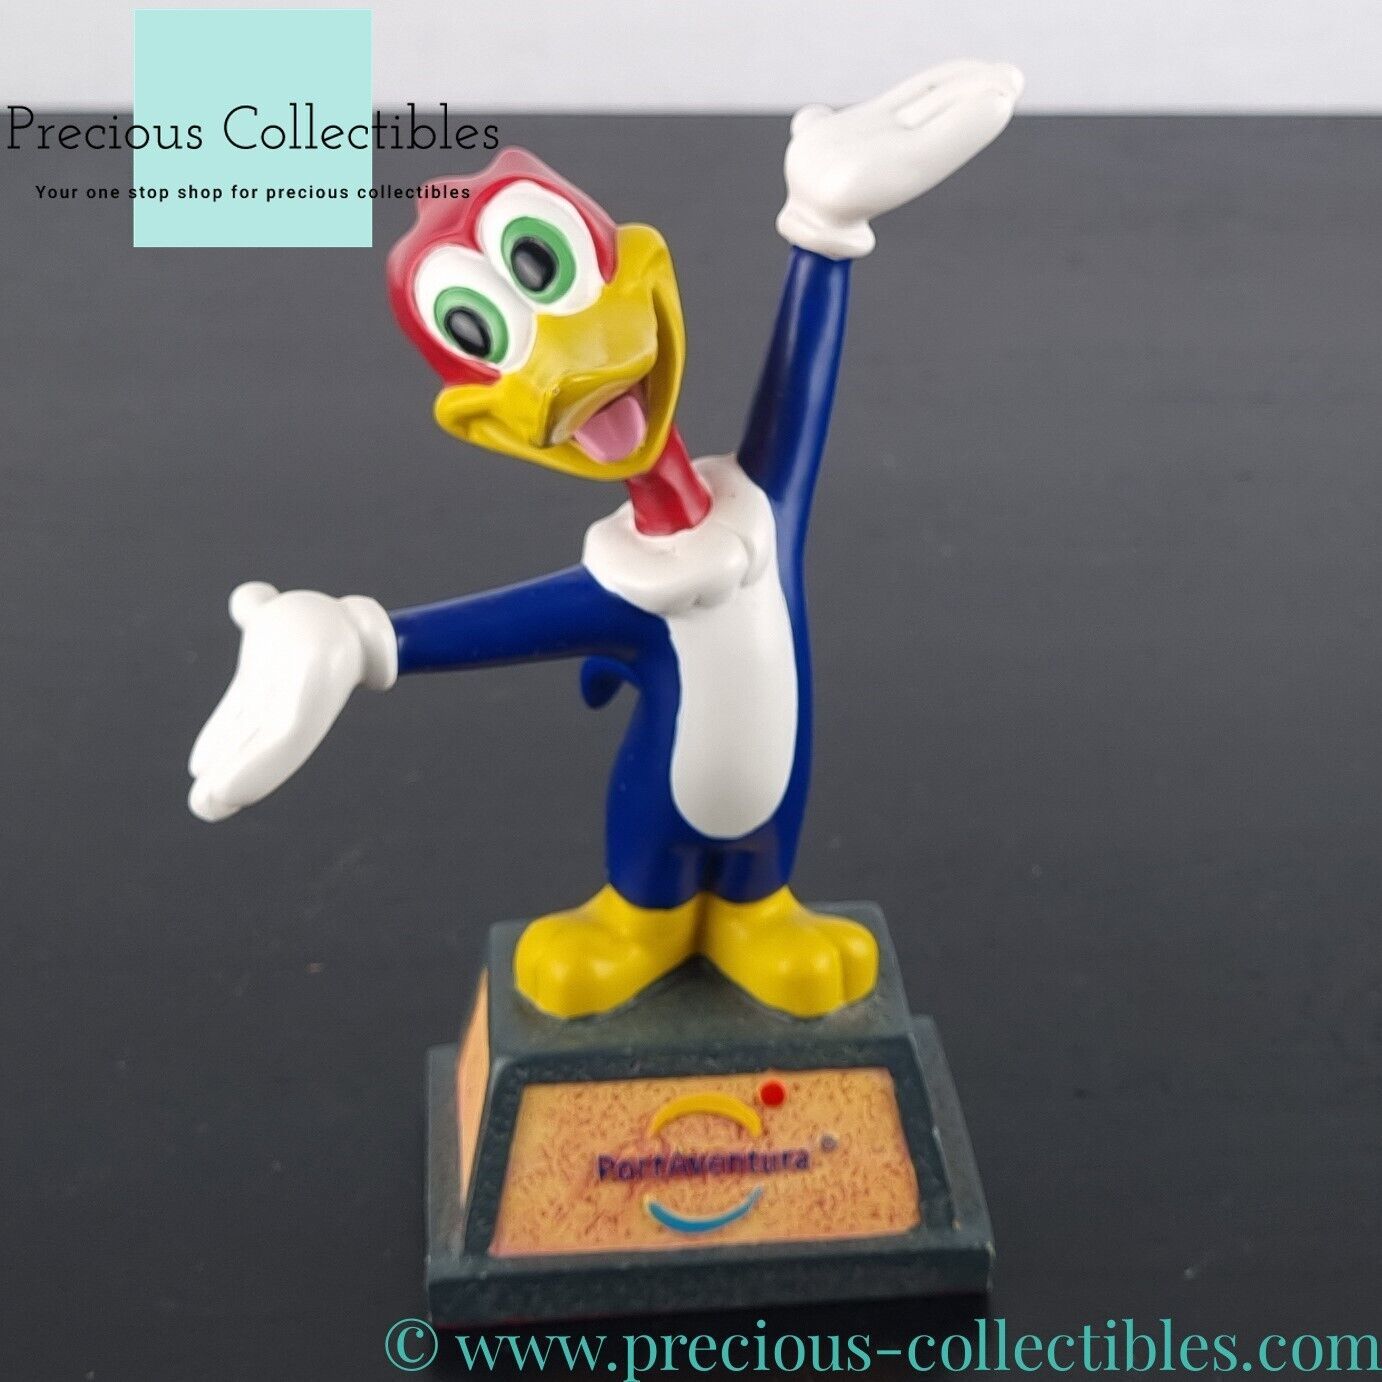 Rare! Woody Woodpecker statue by PortAventura . - $195.00